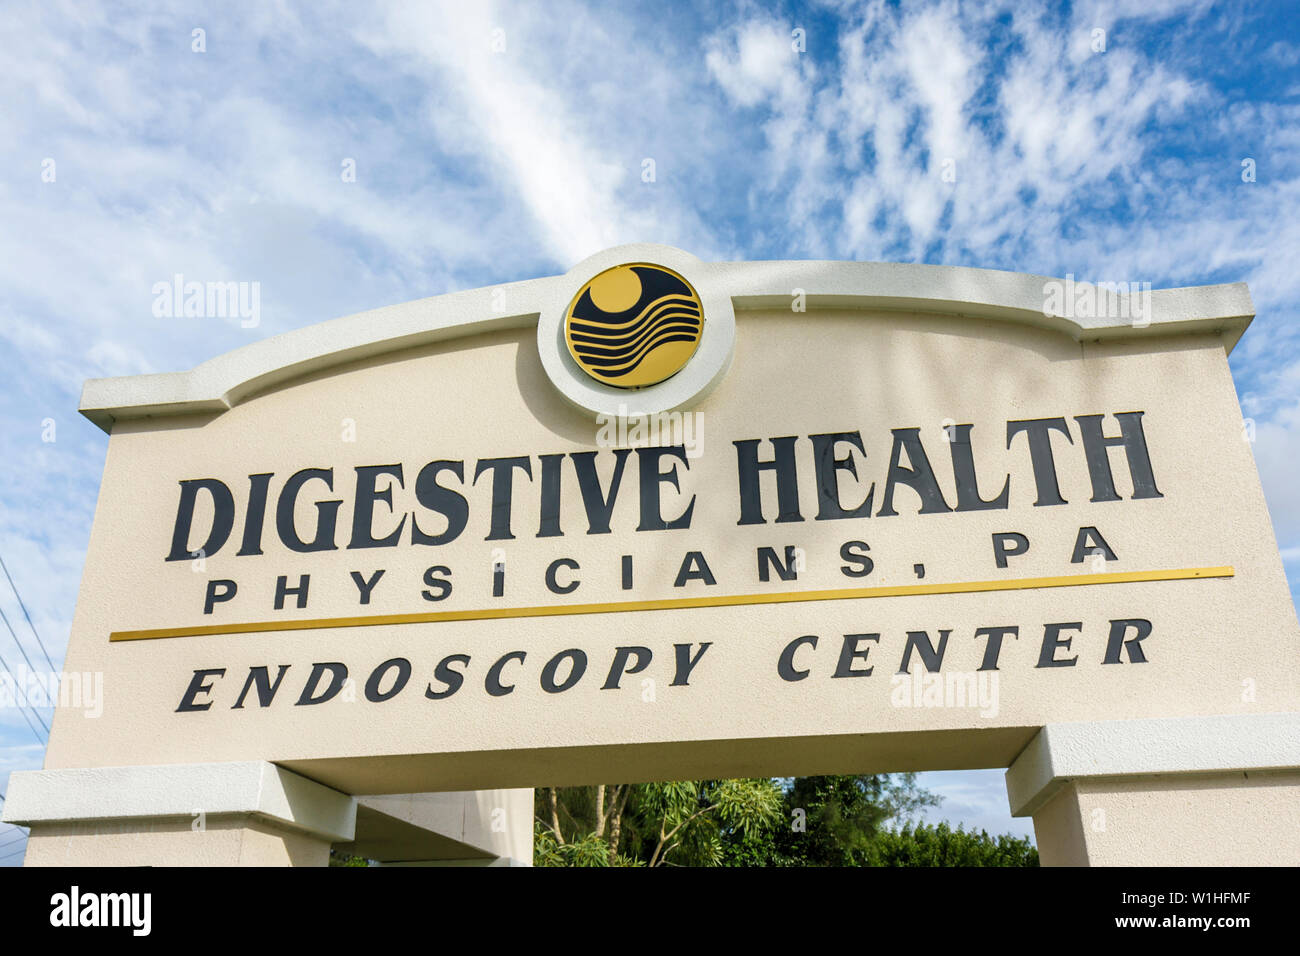 Fort Ft. Myers Florida,Endoscopy Center,medical practice,Digestive Health Physiciansal association,sign,logo,diagnosis,GI,gastrointestinal,imaging,vis Stock Photo